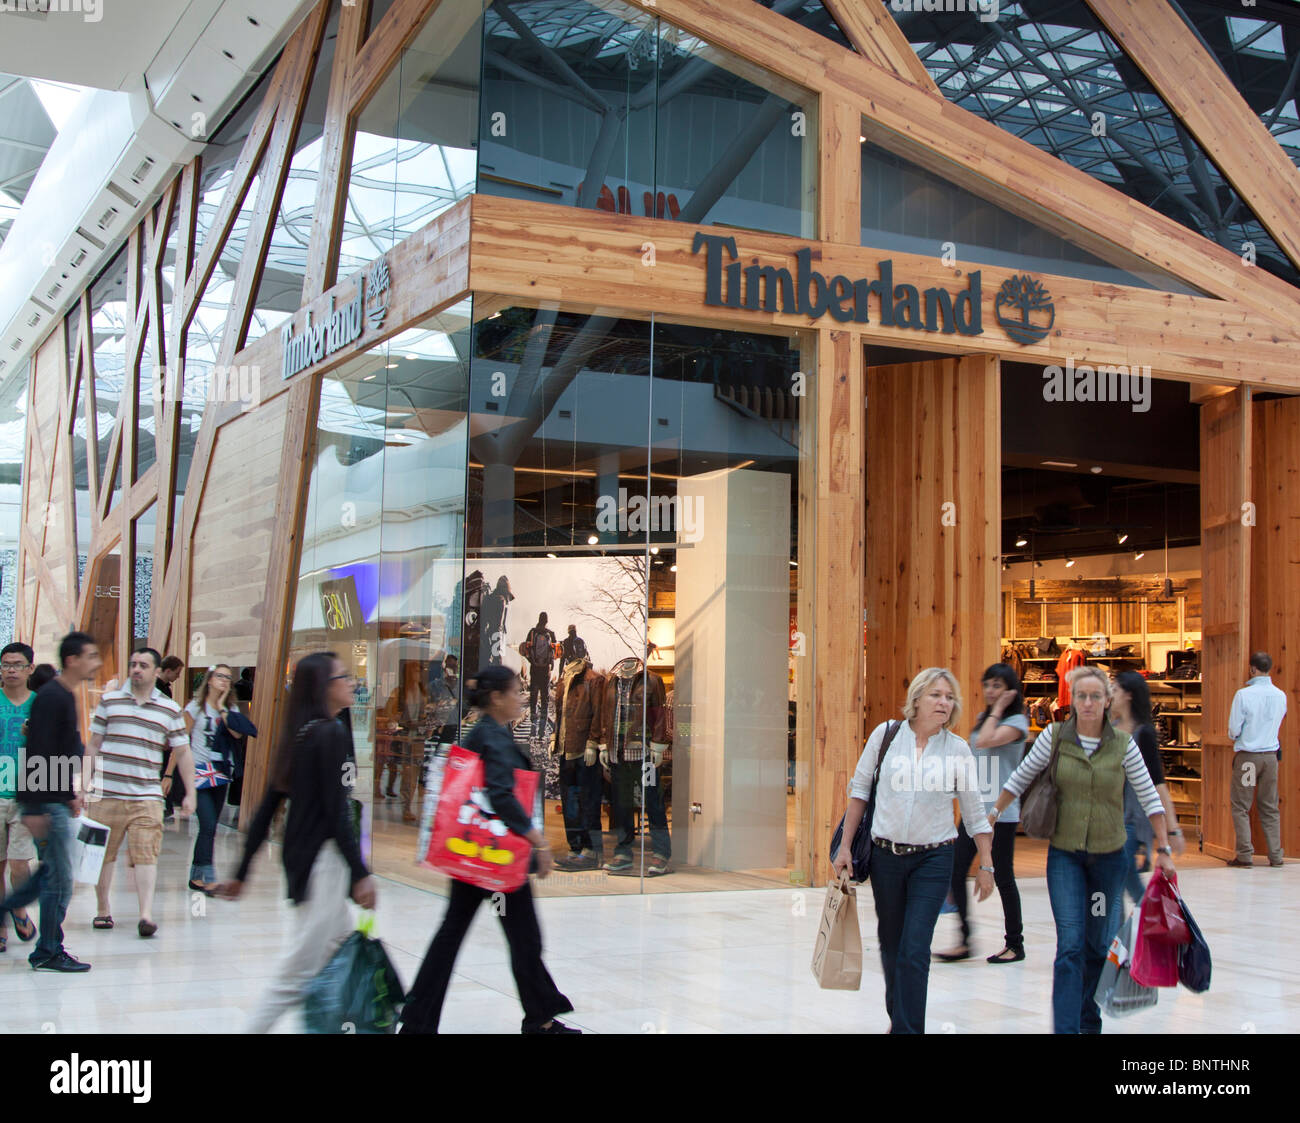 Timberland store uk shop fotografías e imágenes de alta resolución - Alamy